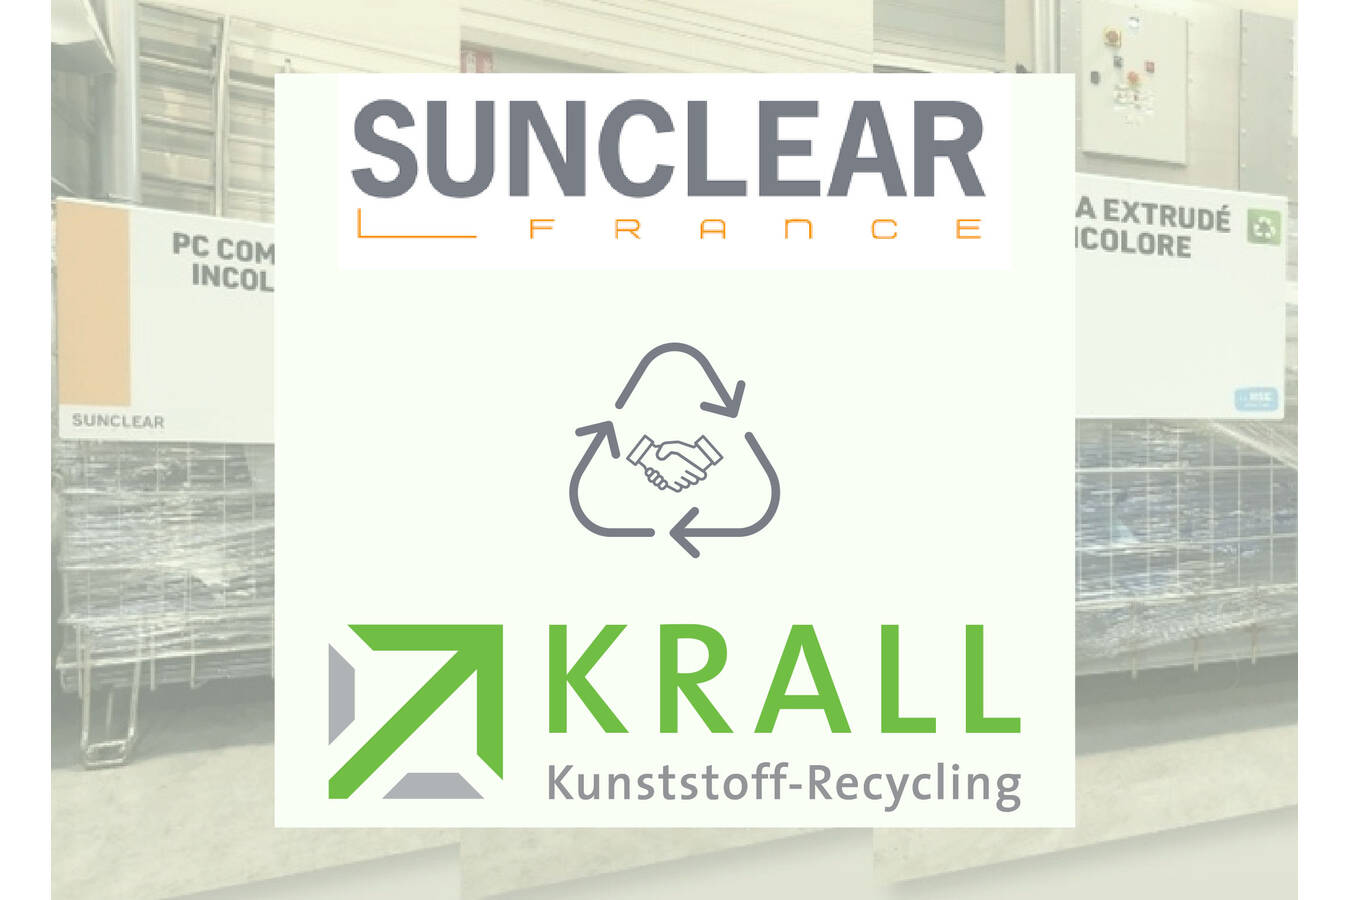 Krall schließt Entsorgungsvertrag mit Sunclear France  Krall Kunststoff-Recycling hat einen Entsorgungsvertrag mit dem französischen Halbzeug-Distributor Sunclear geschlossen.